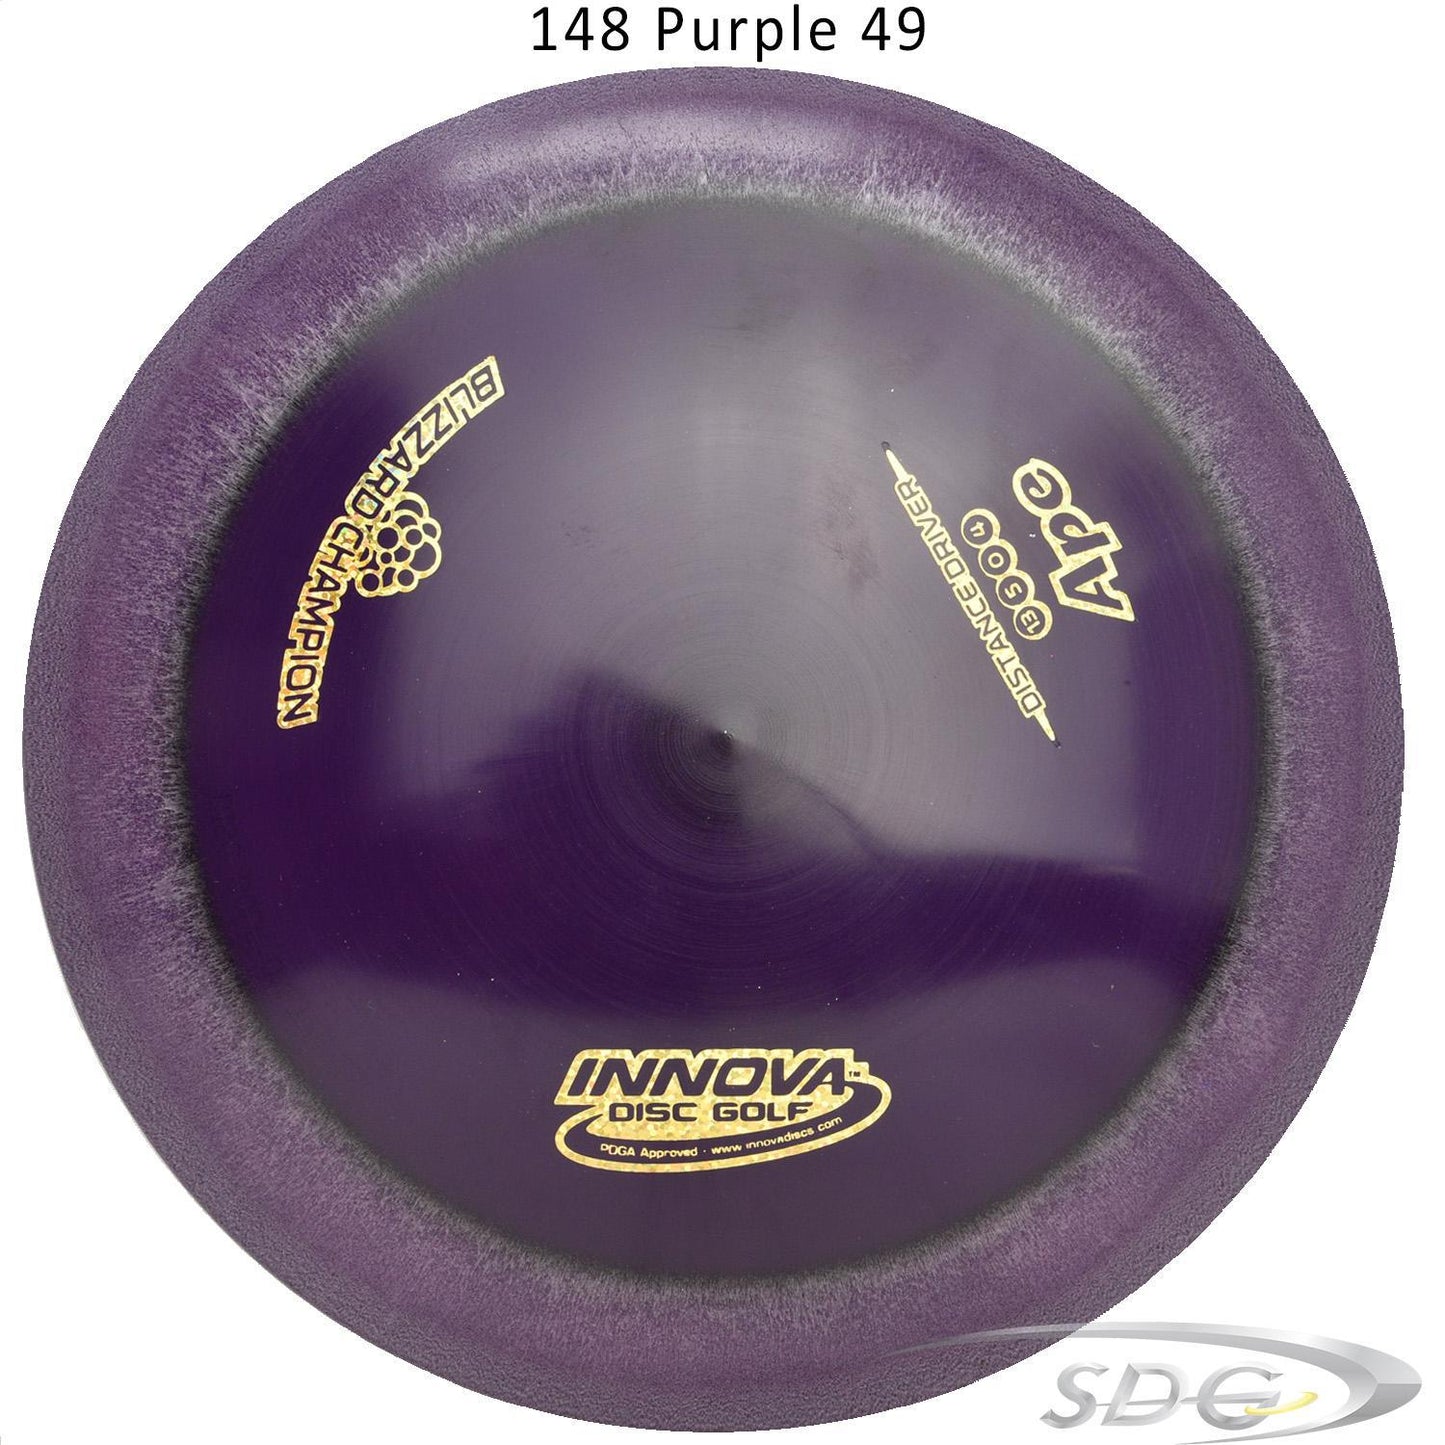 innova-blizzard-champion-ape-disc-golf-distance-driver 148 Purple 49 